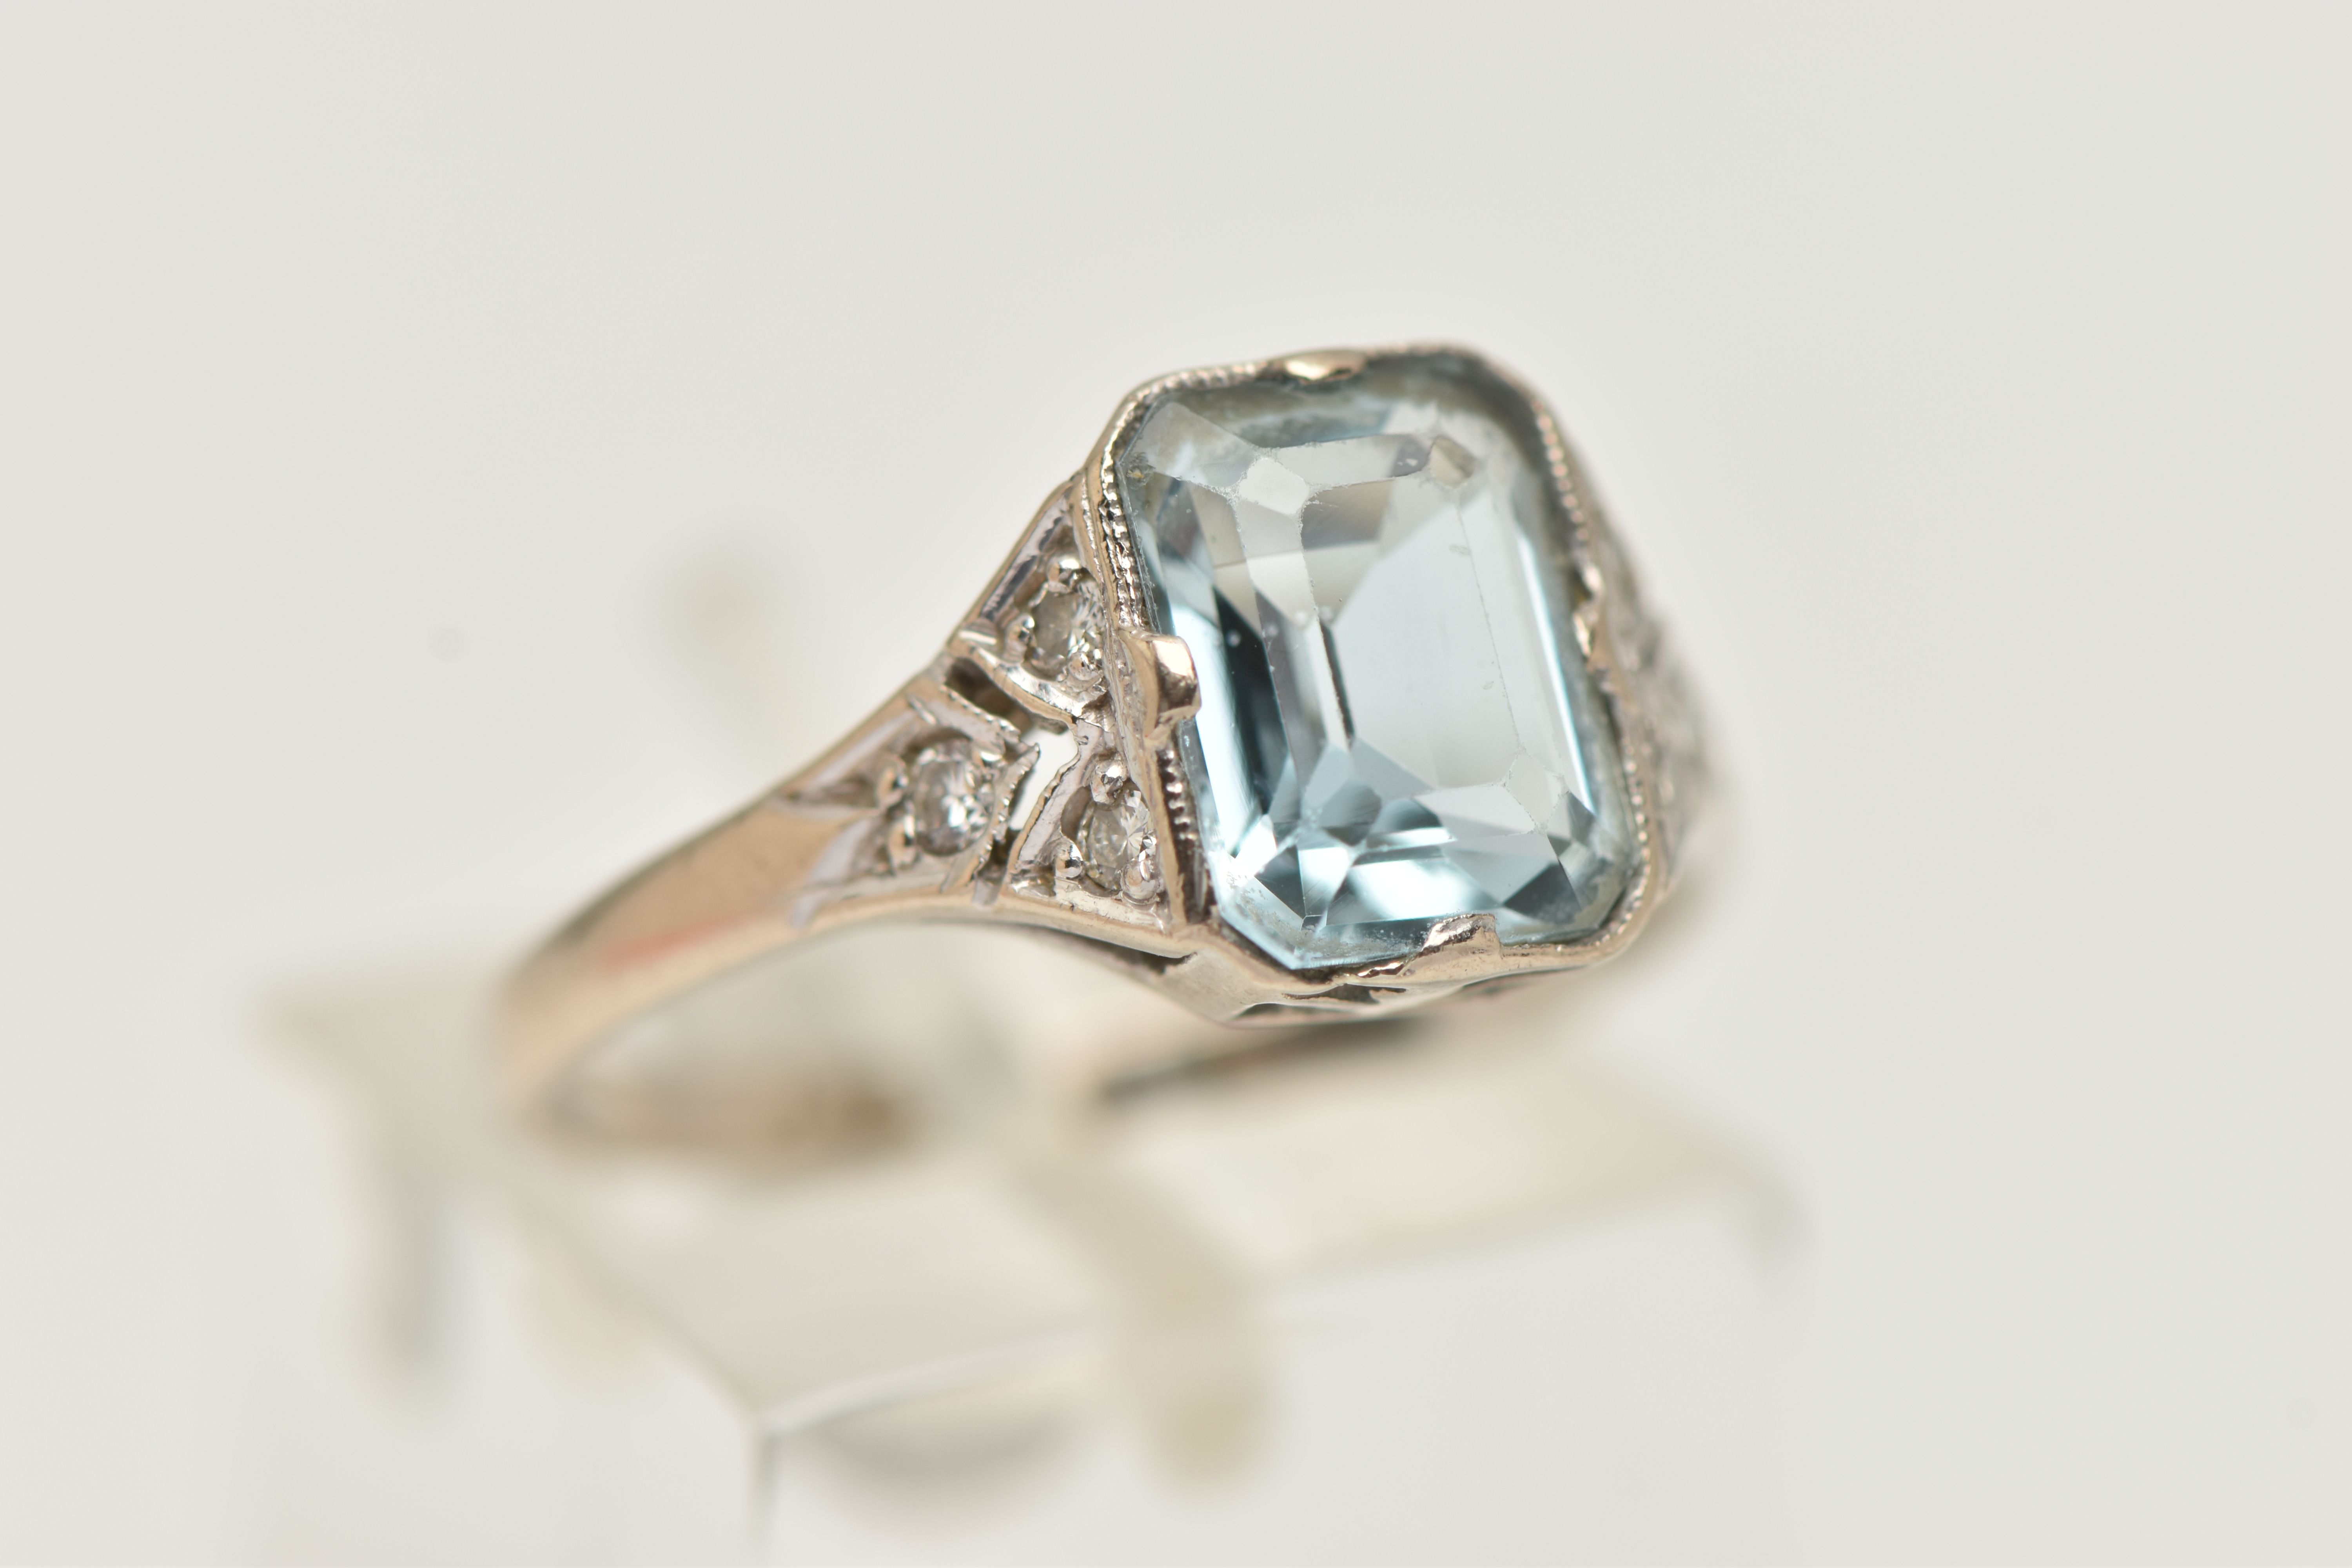 AN AQUAMARINE AND DIAMOND RING, principally set with a rectangular cut aquamarine, approximate - Image 4 of 4